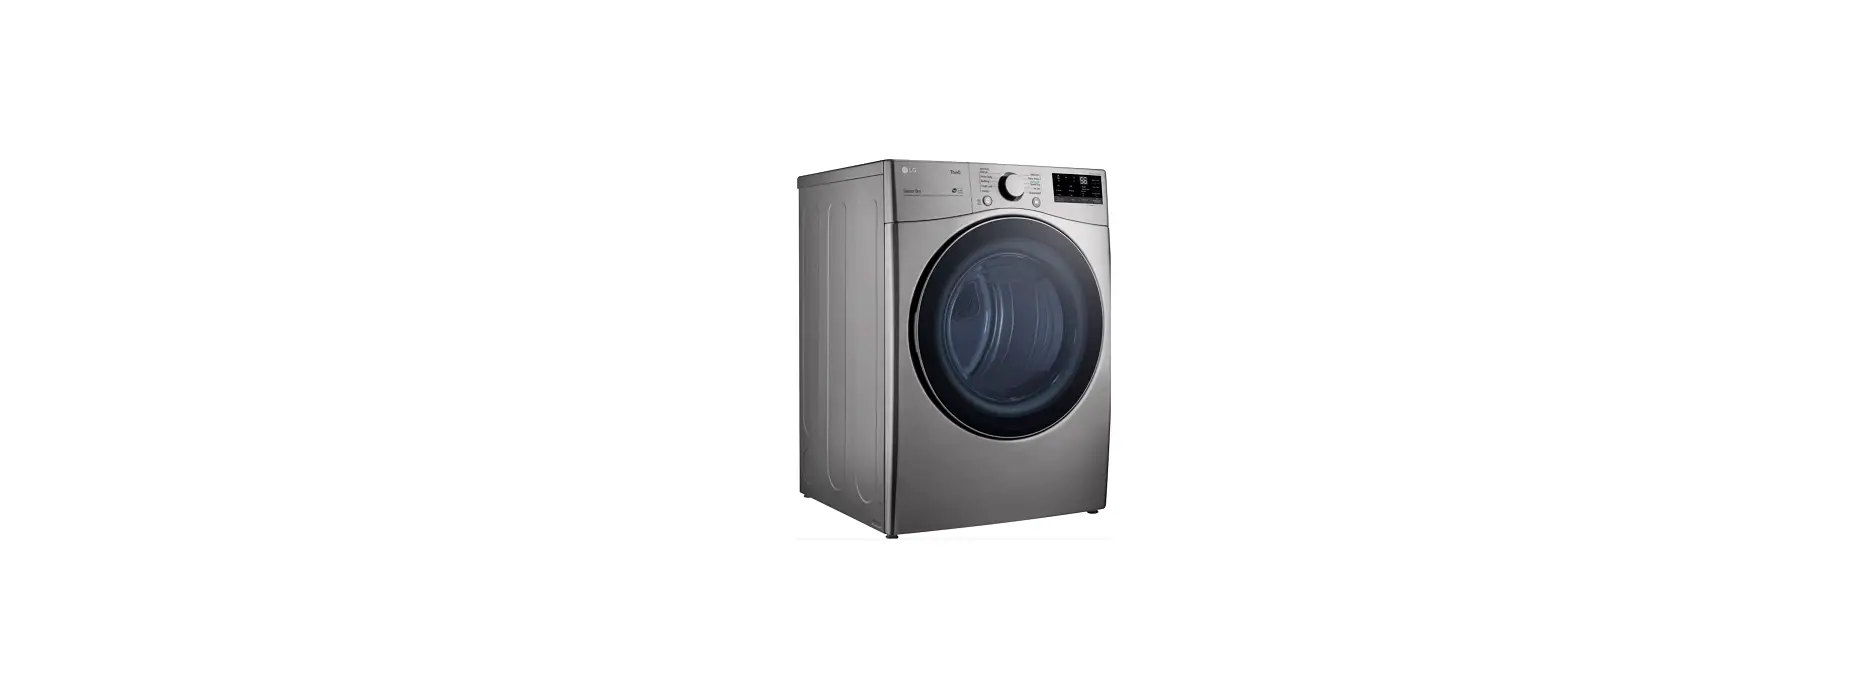 DLE3600 7.4 Front Load Dryer